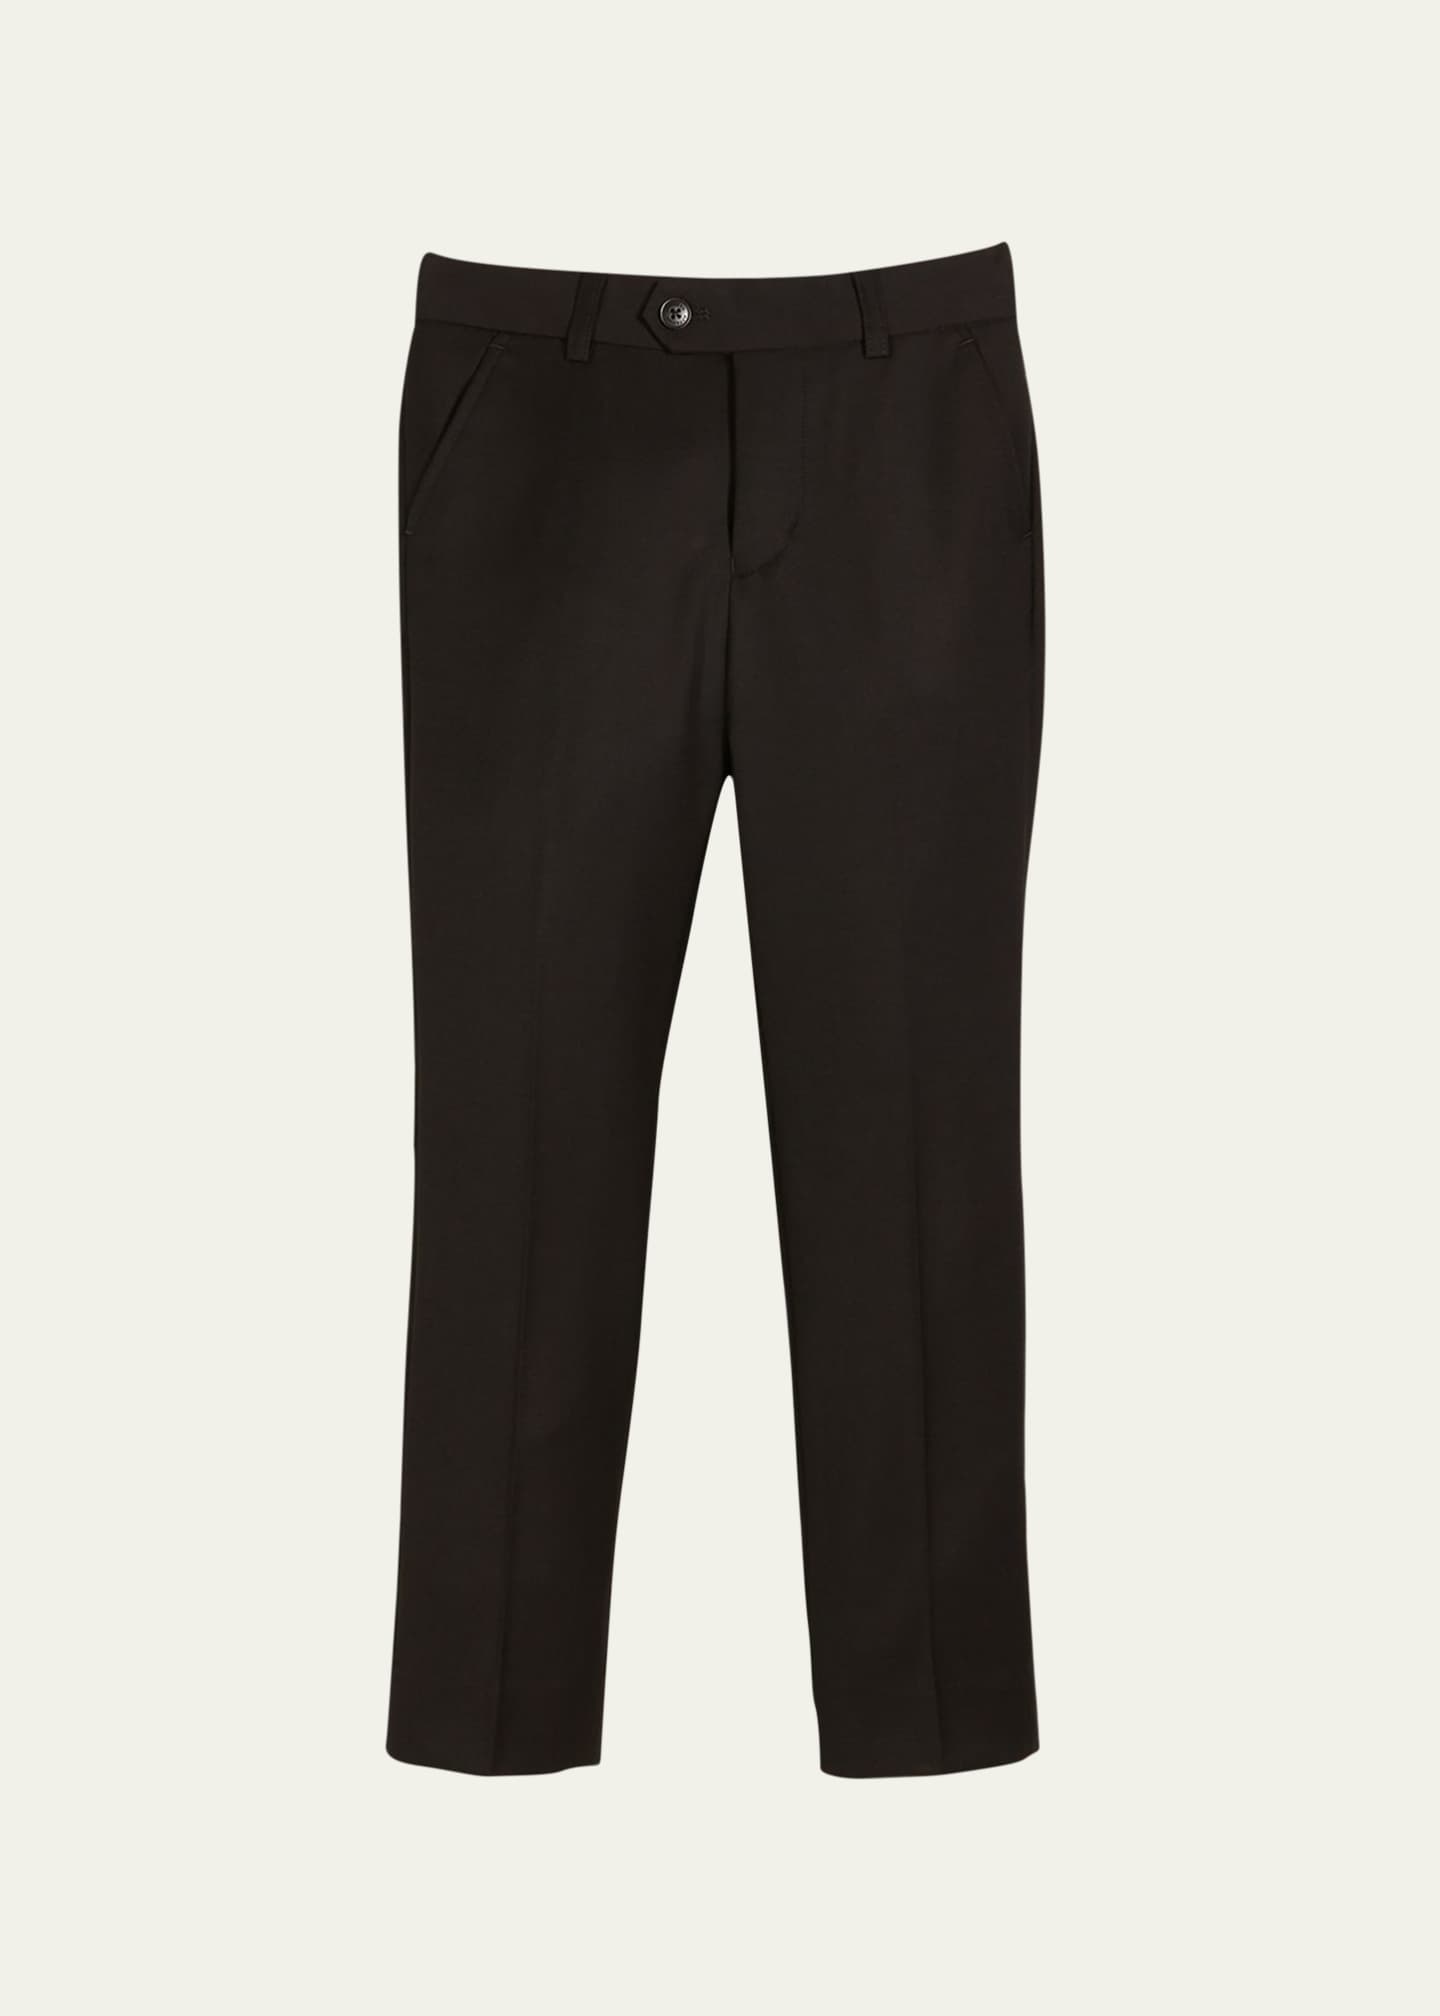 Appaman Slim Suit Pants, Black, Size 4-14 Image 1 of 2